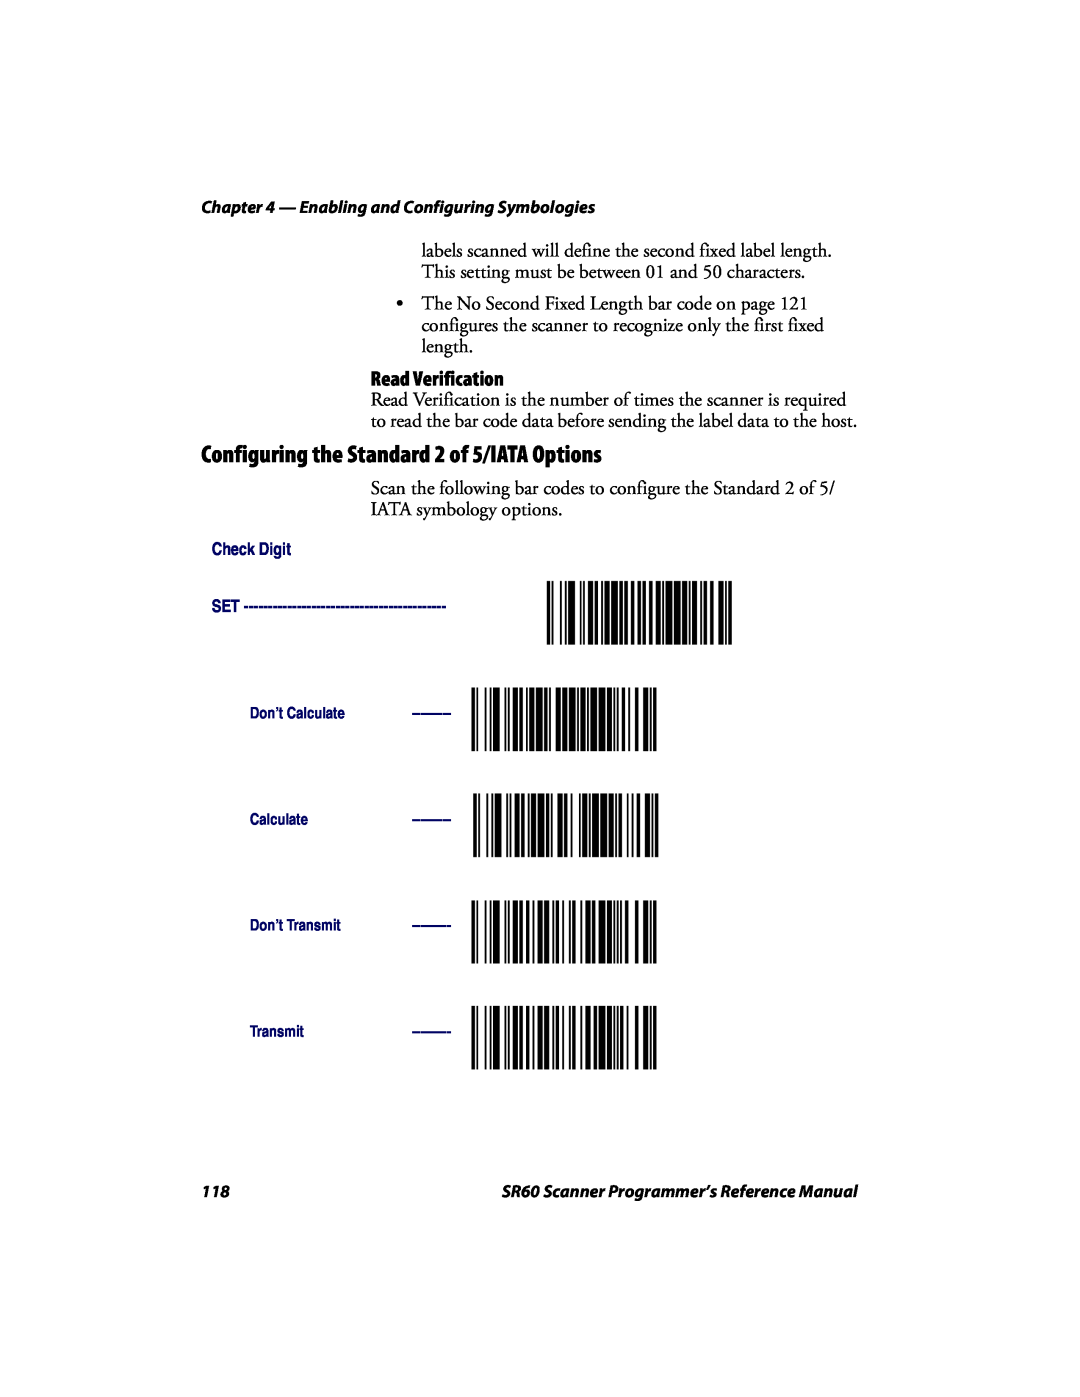 Intermec SR60 manual Configuring the Standard 2 of 5/IATA Options, Read Verification, IATA symbology options 